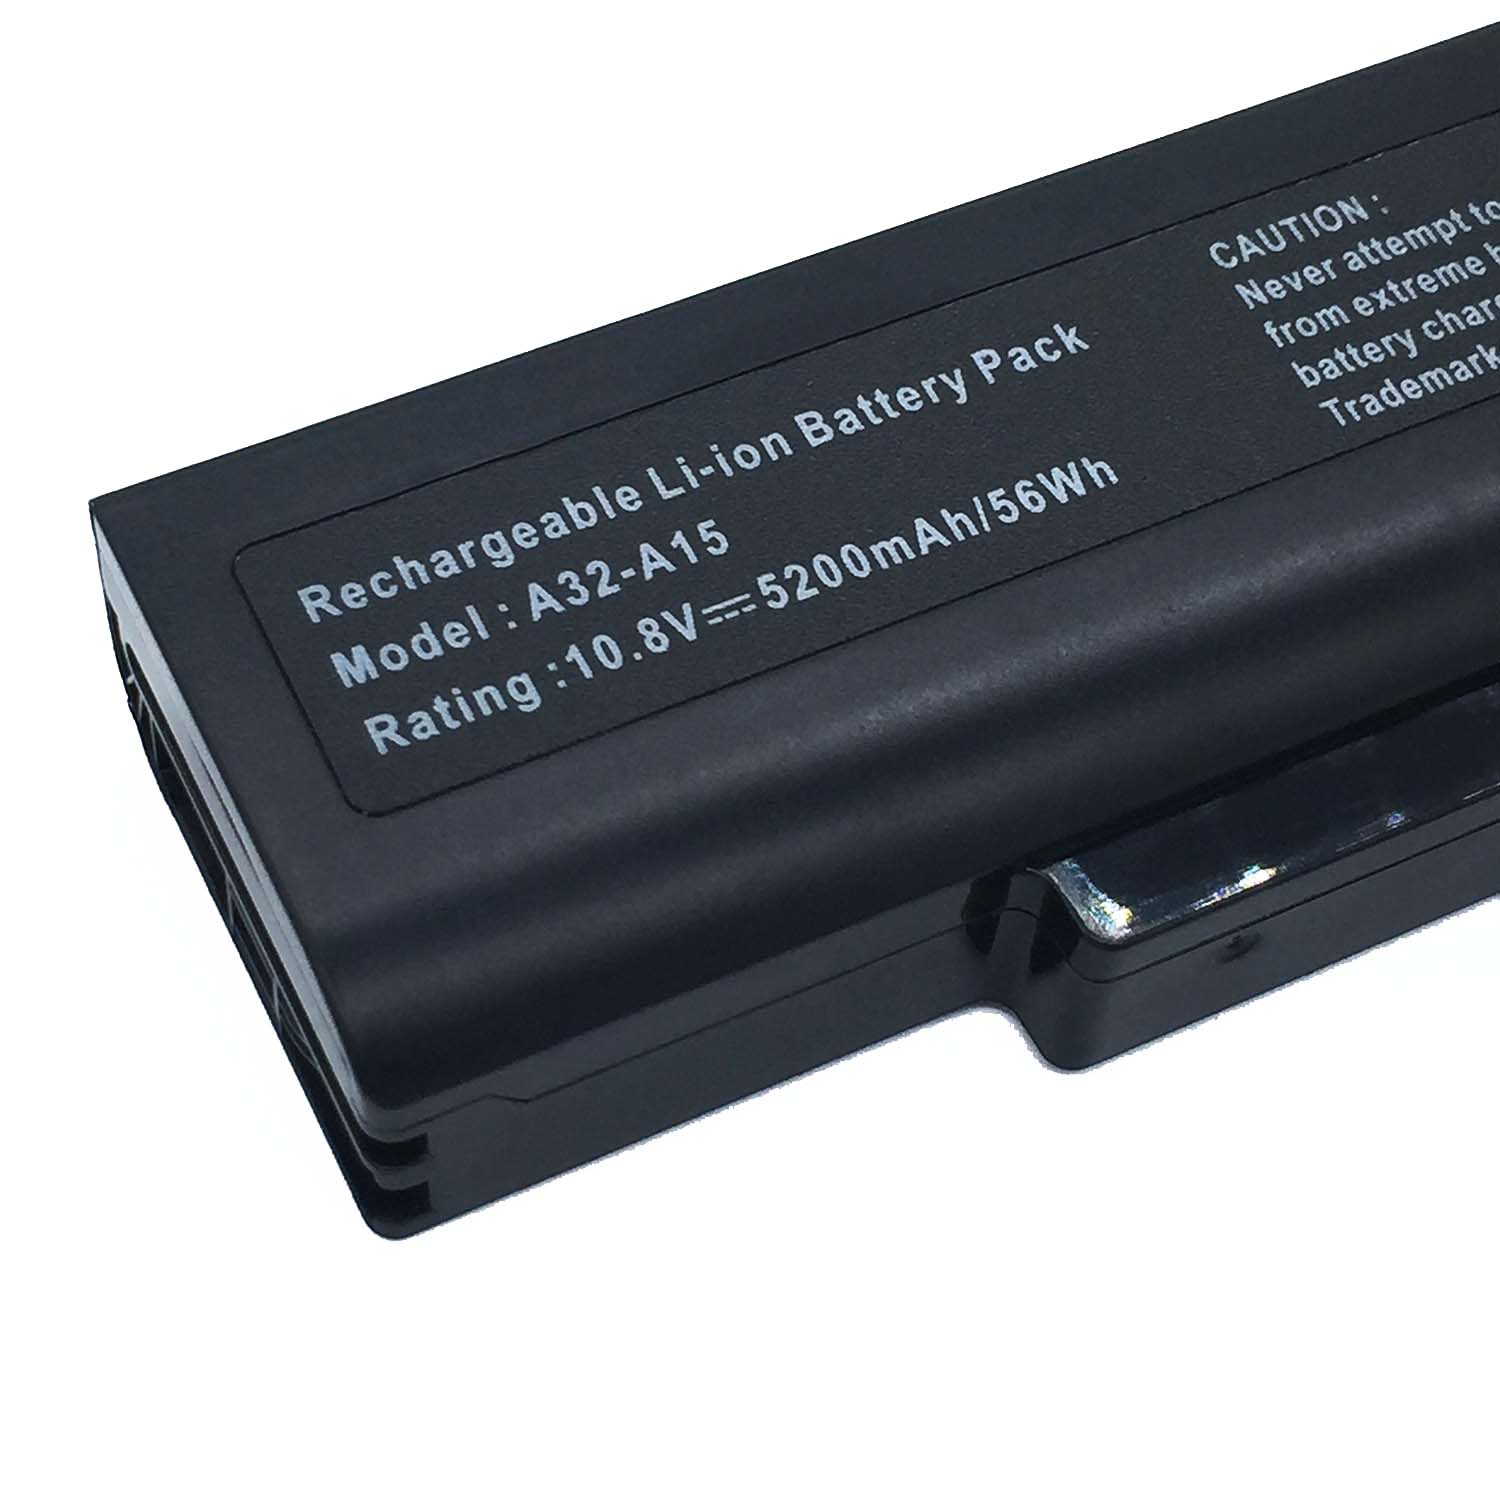 MSI A42-A15 Batterie